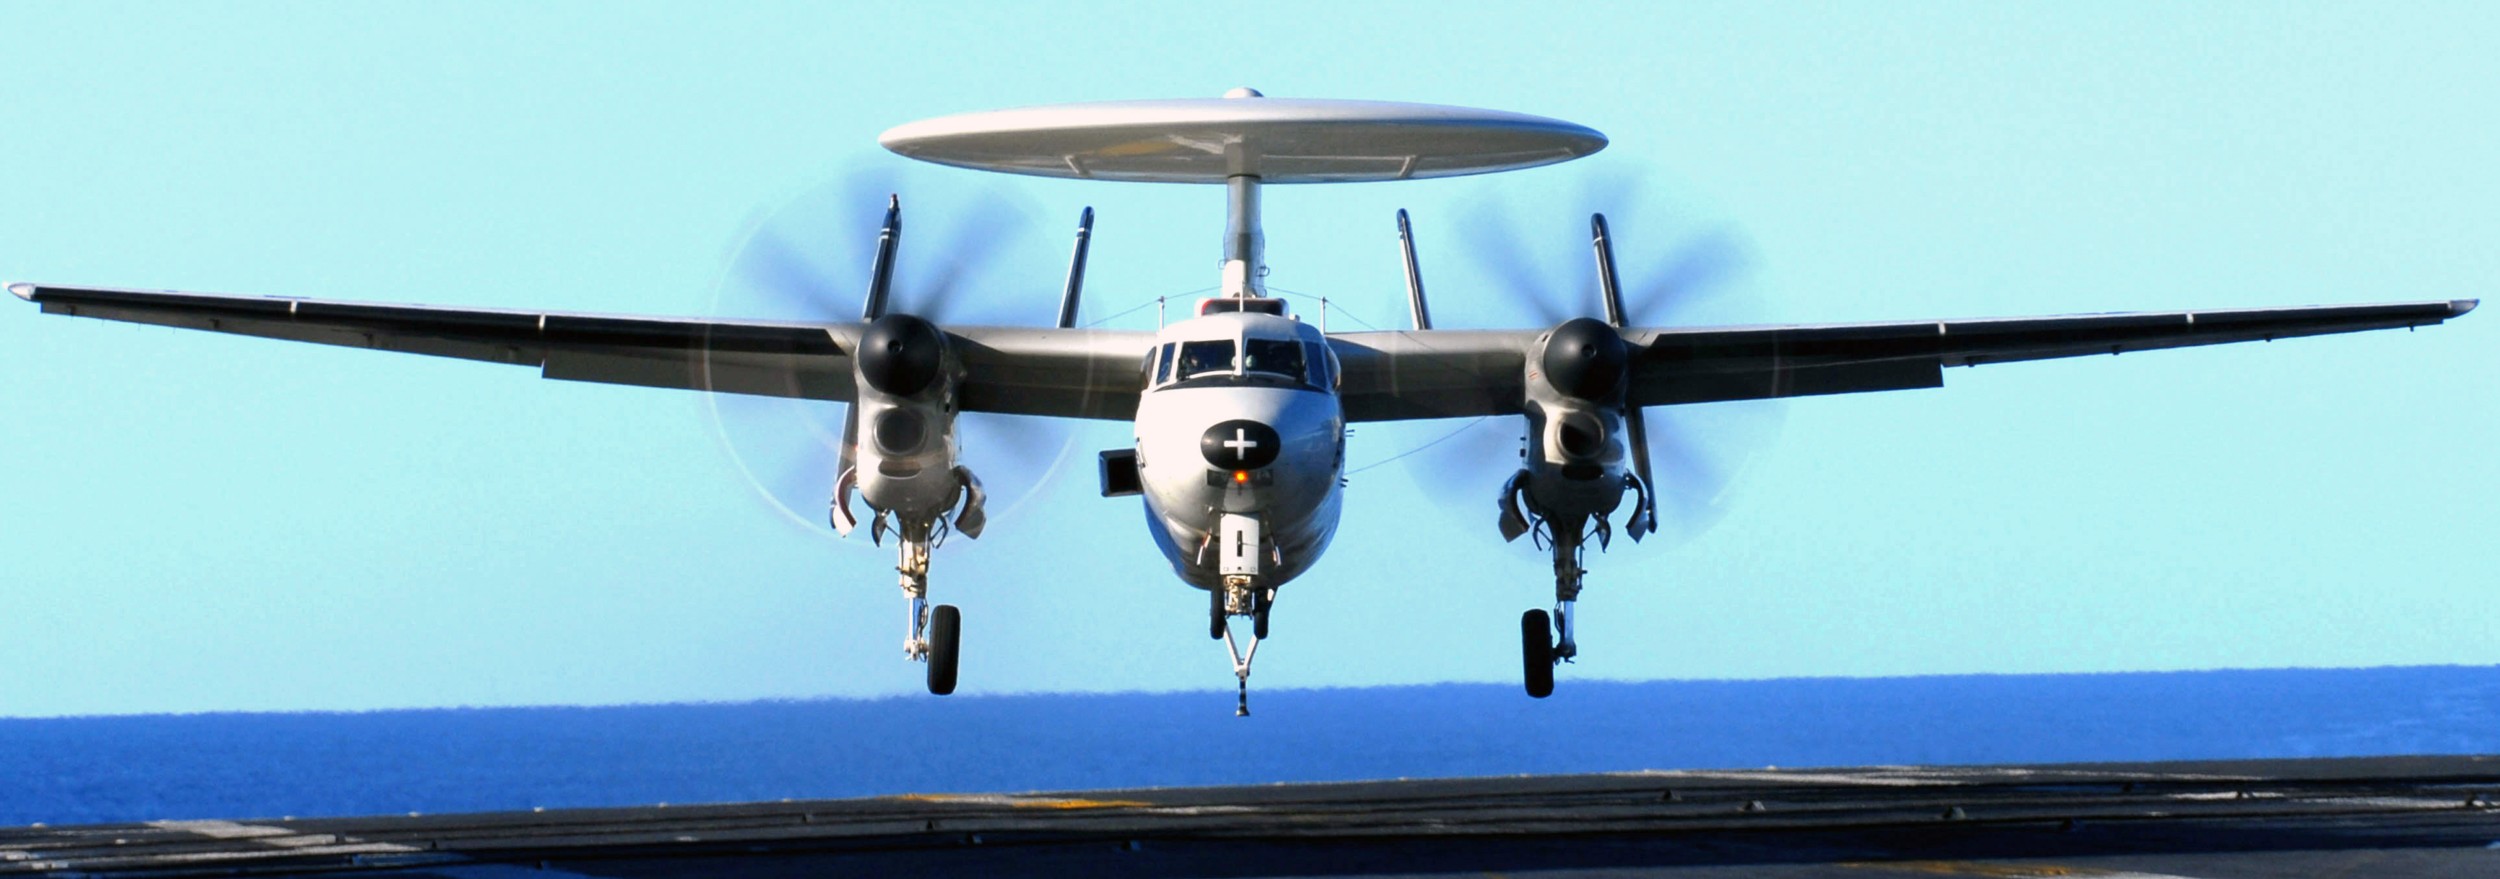 vaw-112 golden hawks carrier airborne early warning squadron us navy grumman e-2c hawkeye cvw-9 uss john c. stennis cvn-74 07